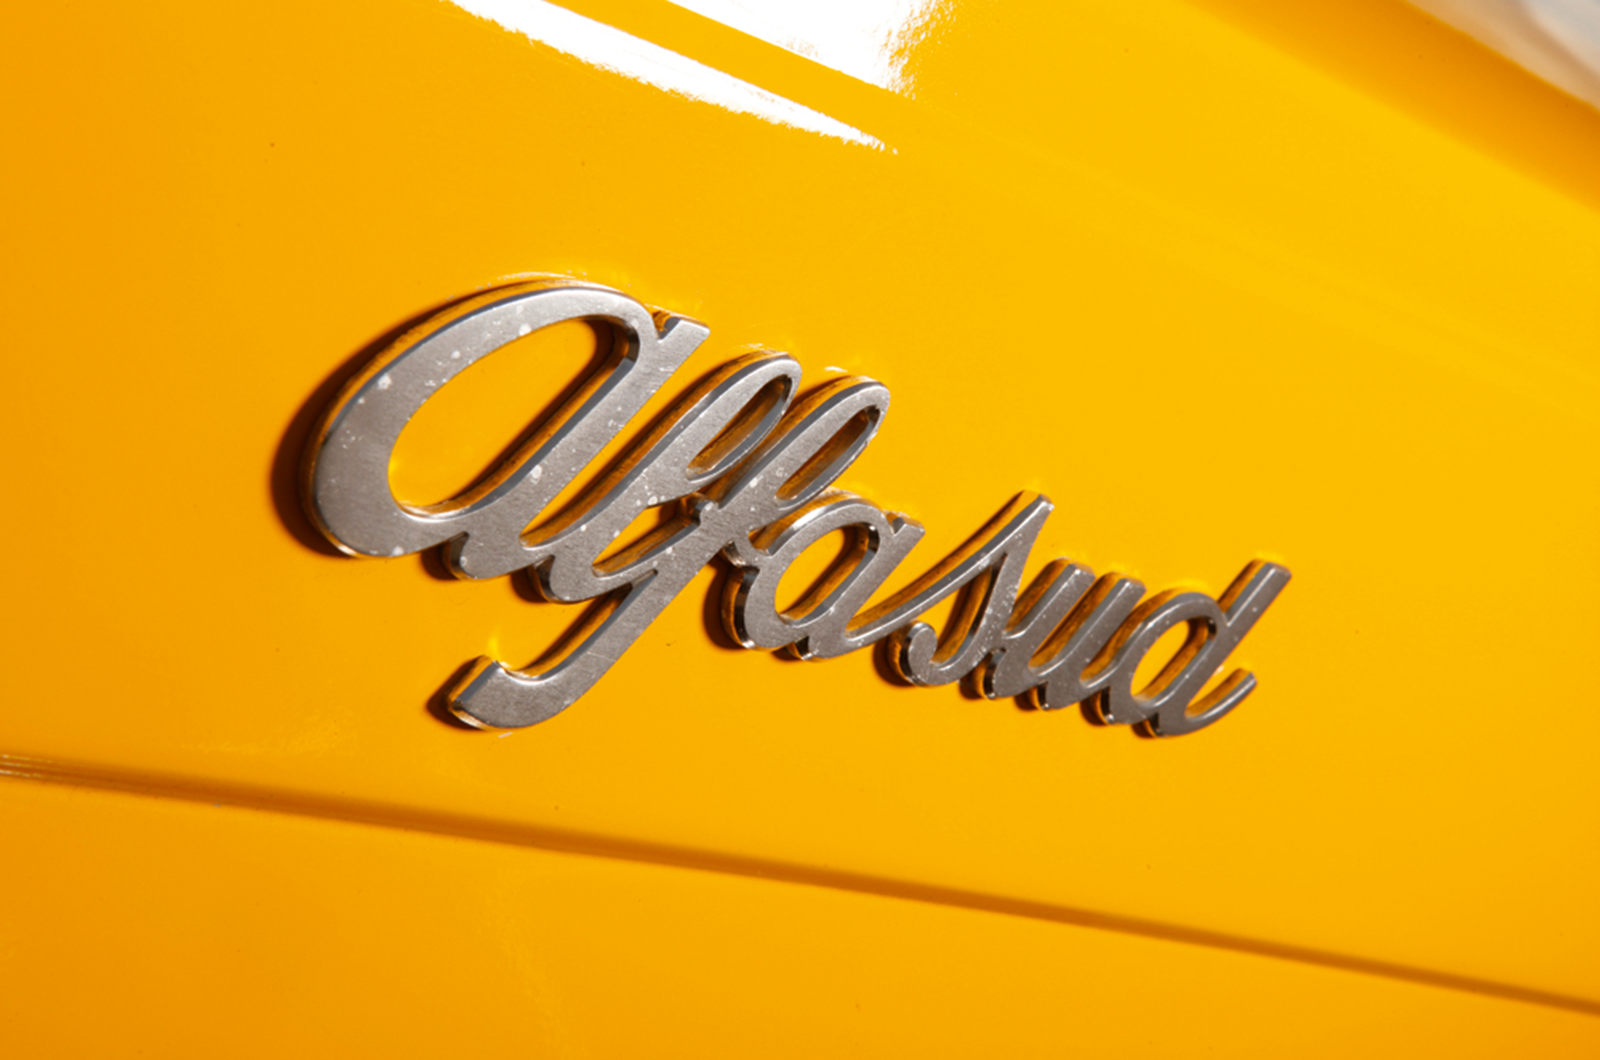 Classic & Sports Car – Celebrating the landmark Alfasud